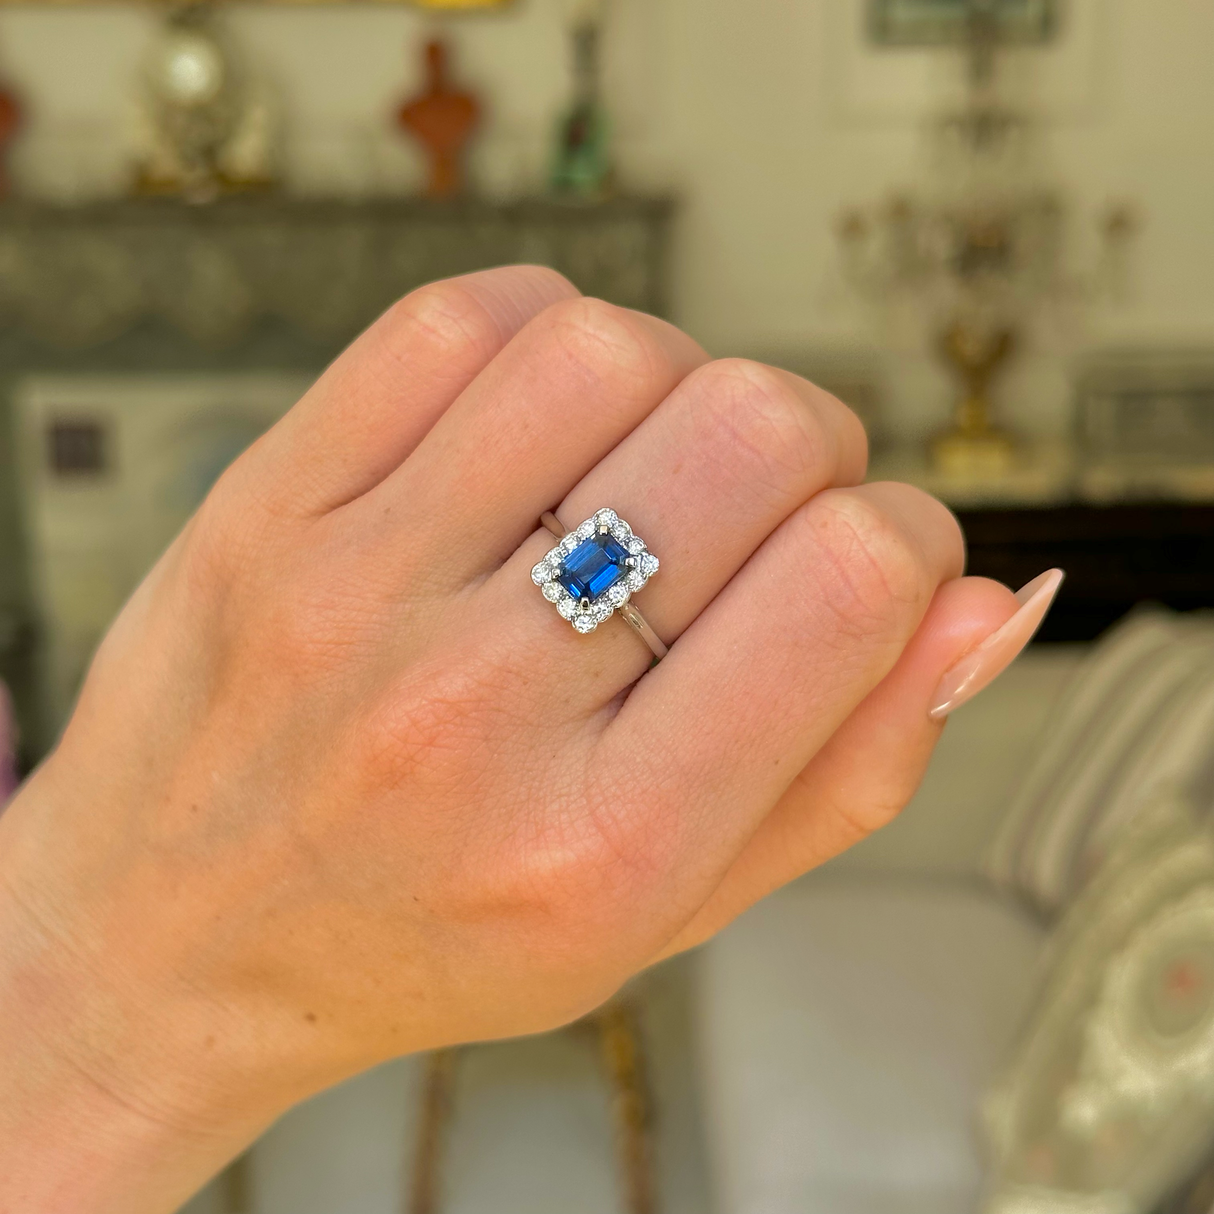 Antique, Art Deco, Emerald-cut Blue Sapphire and Diamond Cluster Ring, Platinum